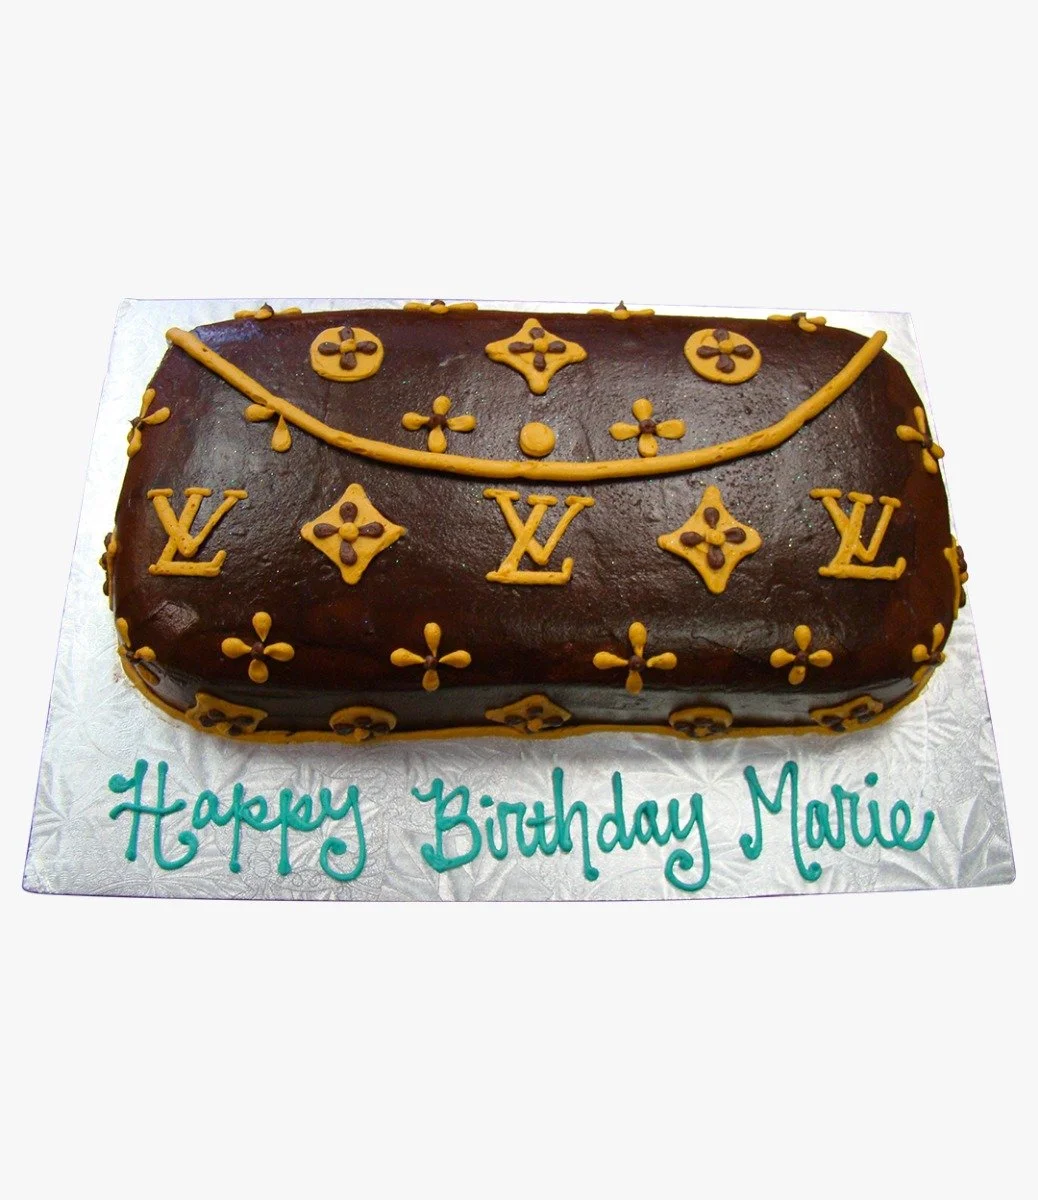 Louis Vuitton Cake by Sugar Sprinkles